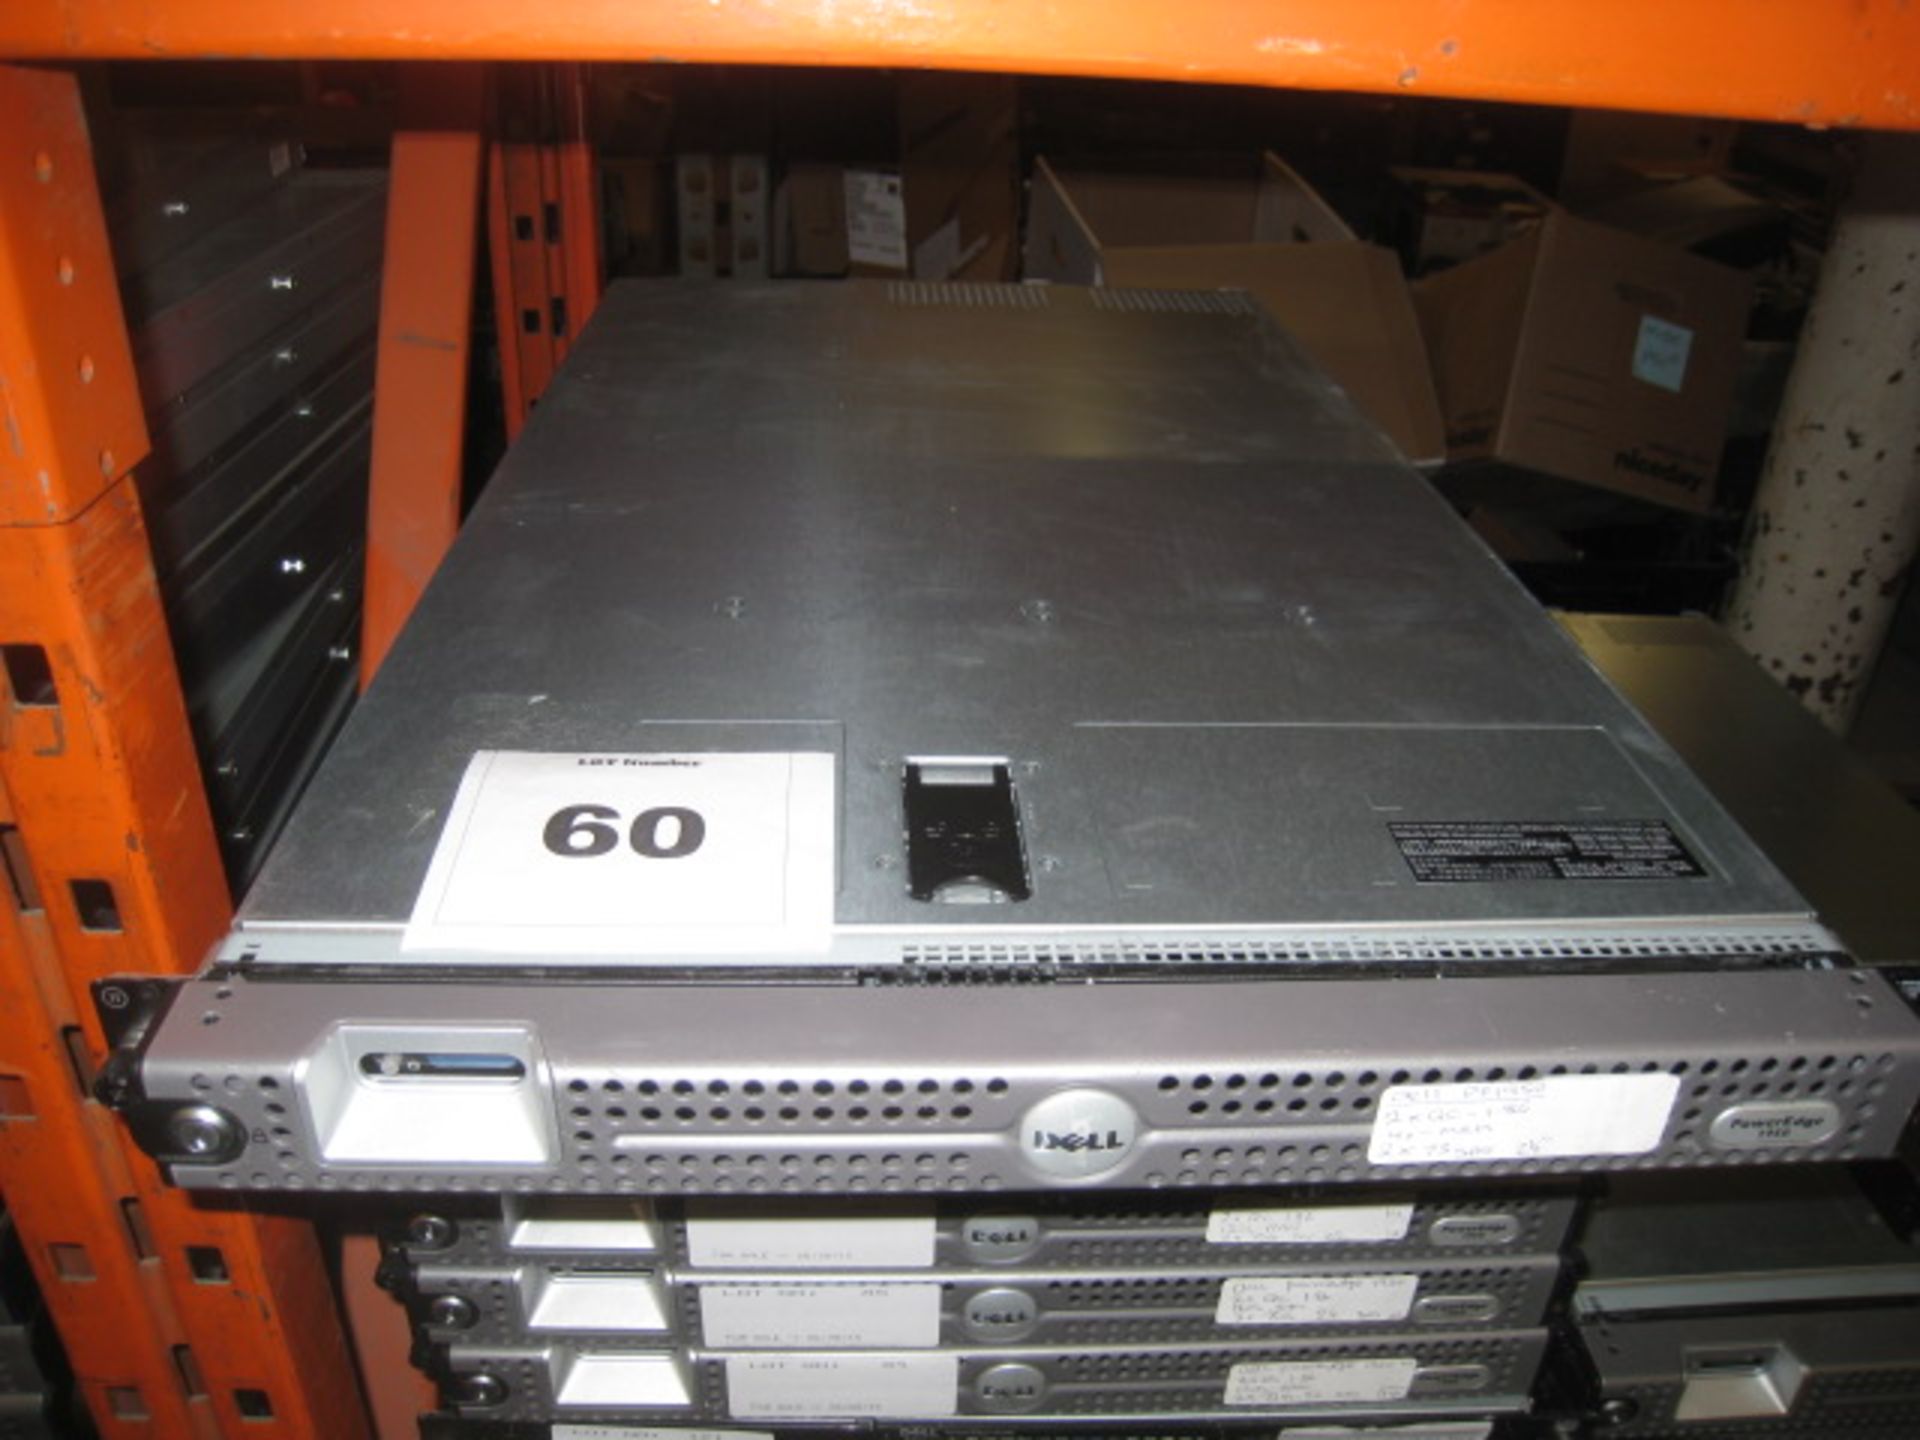 Dell Poweredge 1950 1U file server2 x Quad-core 1.86ghz processor, 4GB RAM, 2 X 73GB SAS HDD'S